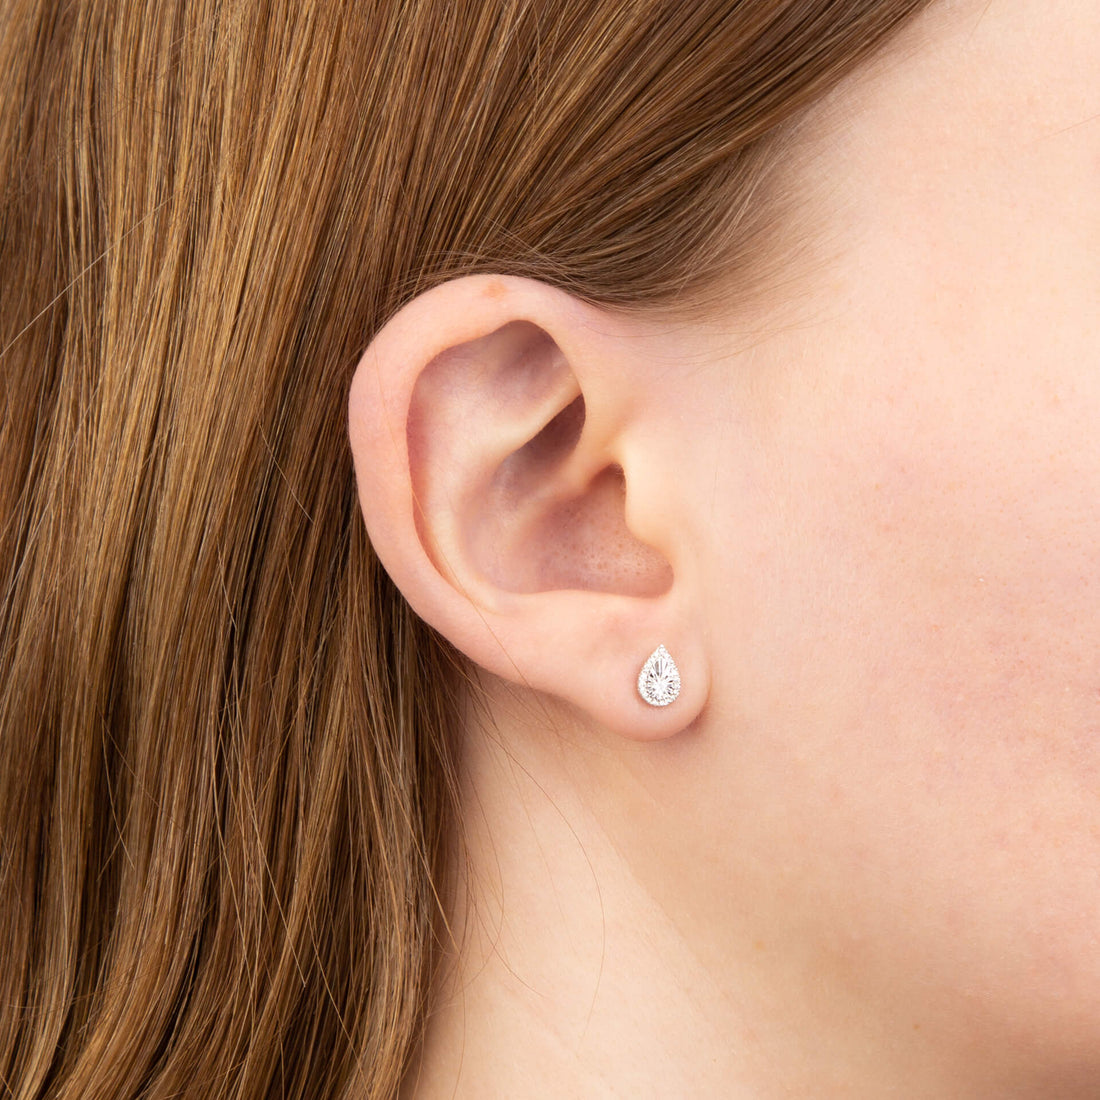 Diamond Cut Teardrop Stud Earrings with Diamond in 9ct White Gold - Robert Anthony Jewellers, Edinburgh